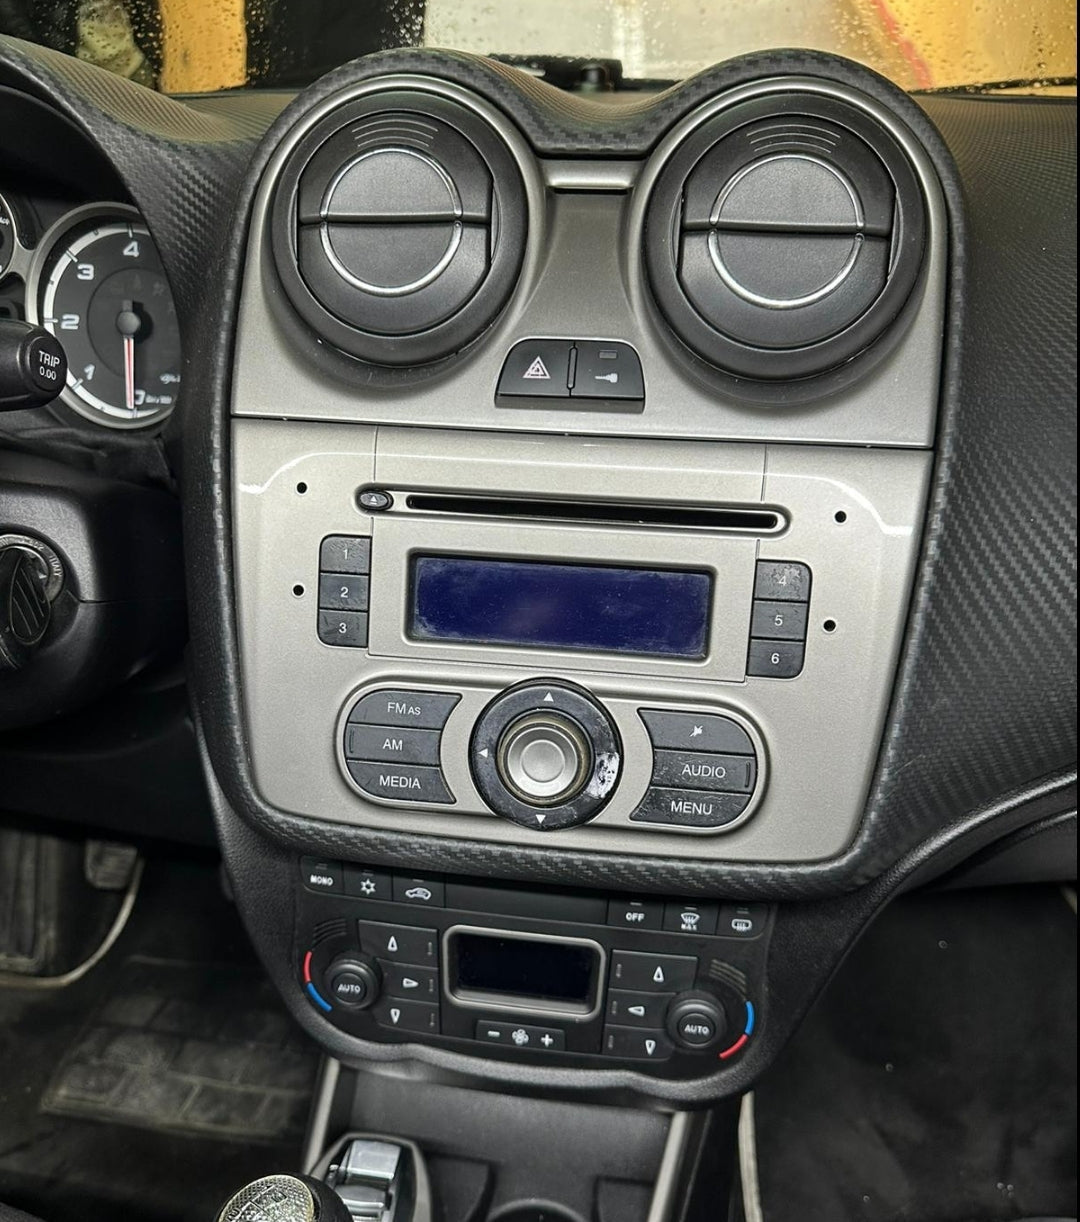 Autoradio per ALFAROMEO MITO [2008 - 2018] - 2GB/4GB Ram, Sistema auto Intelligente, 2Din 9"Pollici, GPS, Navigatore, Wifi